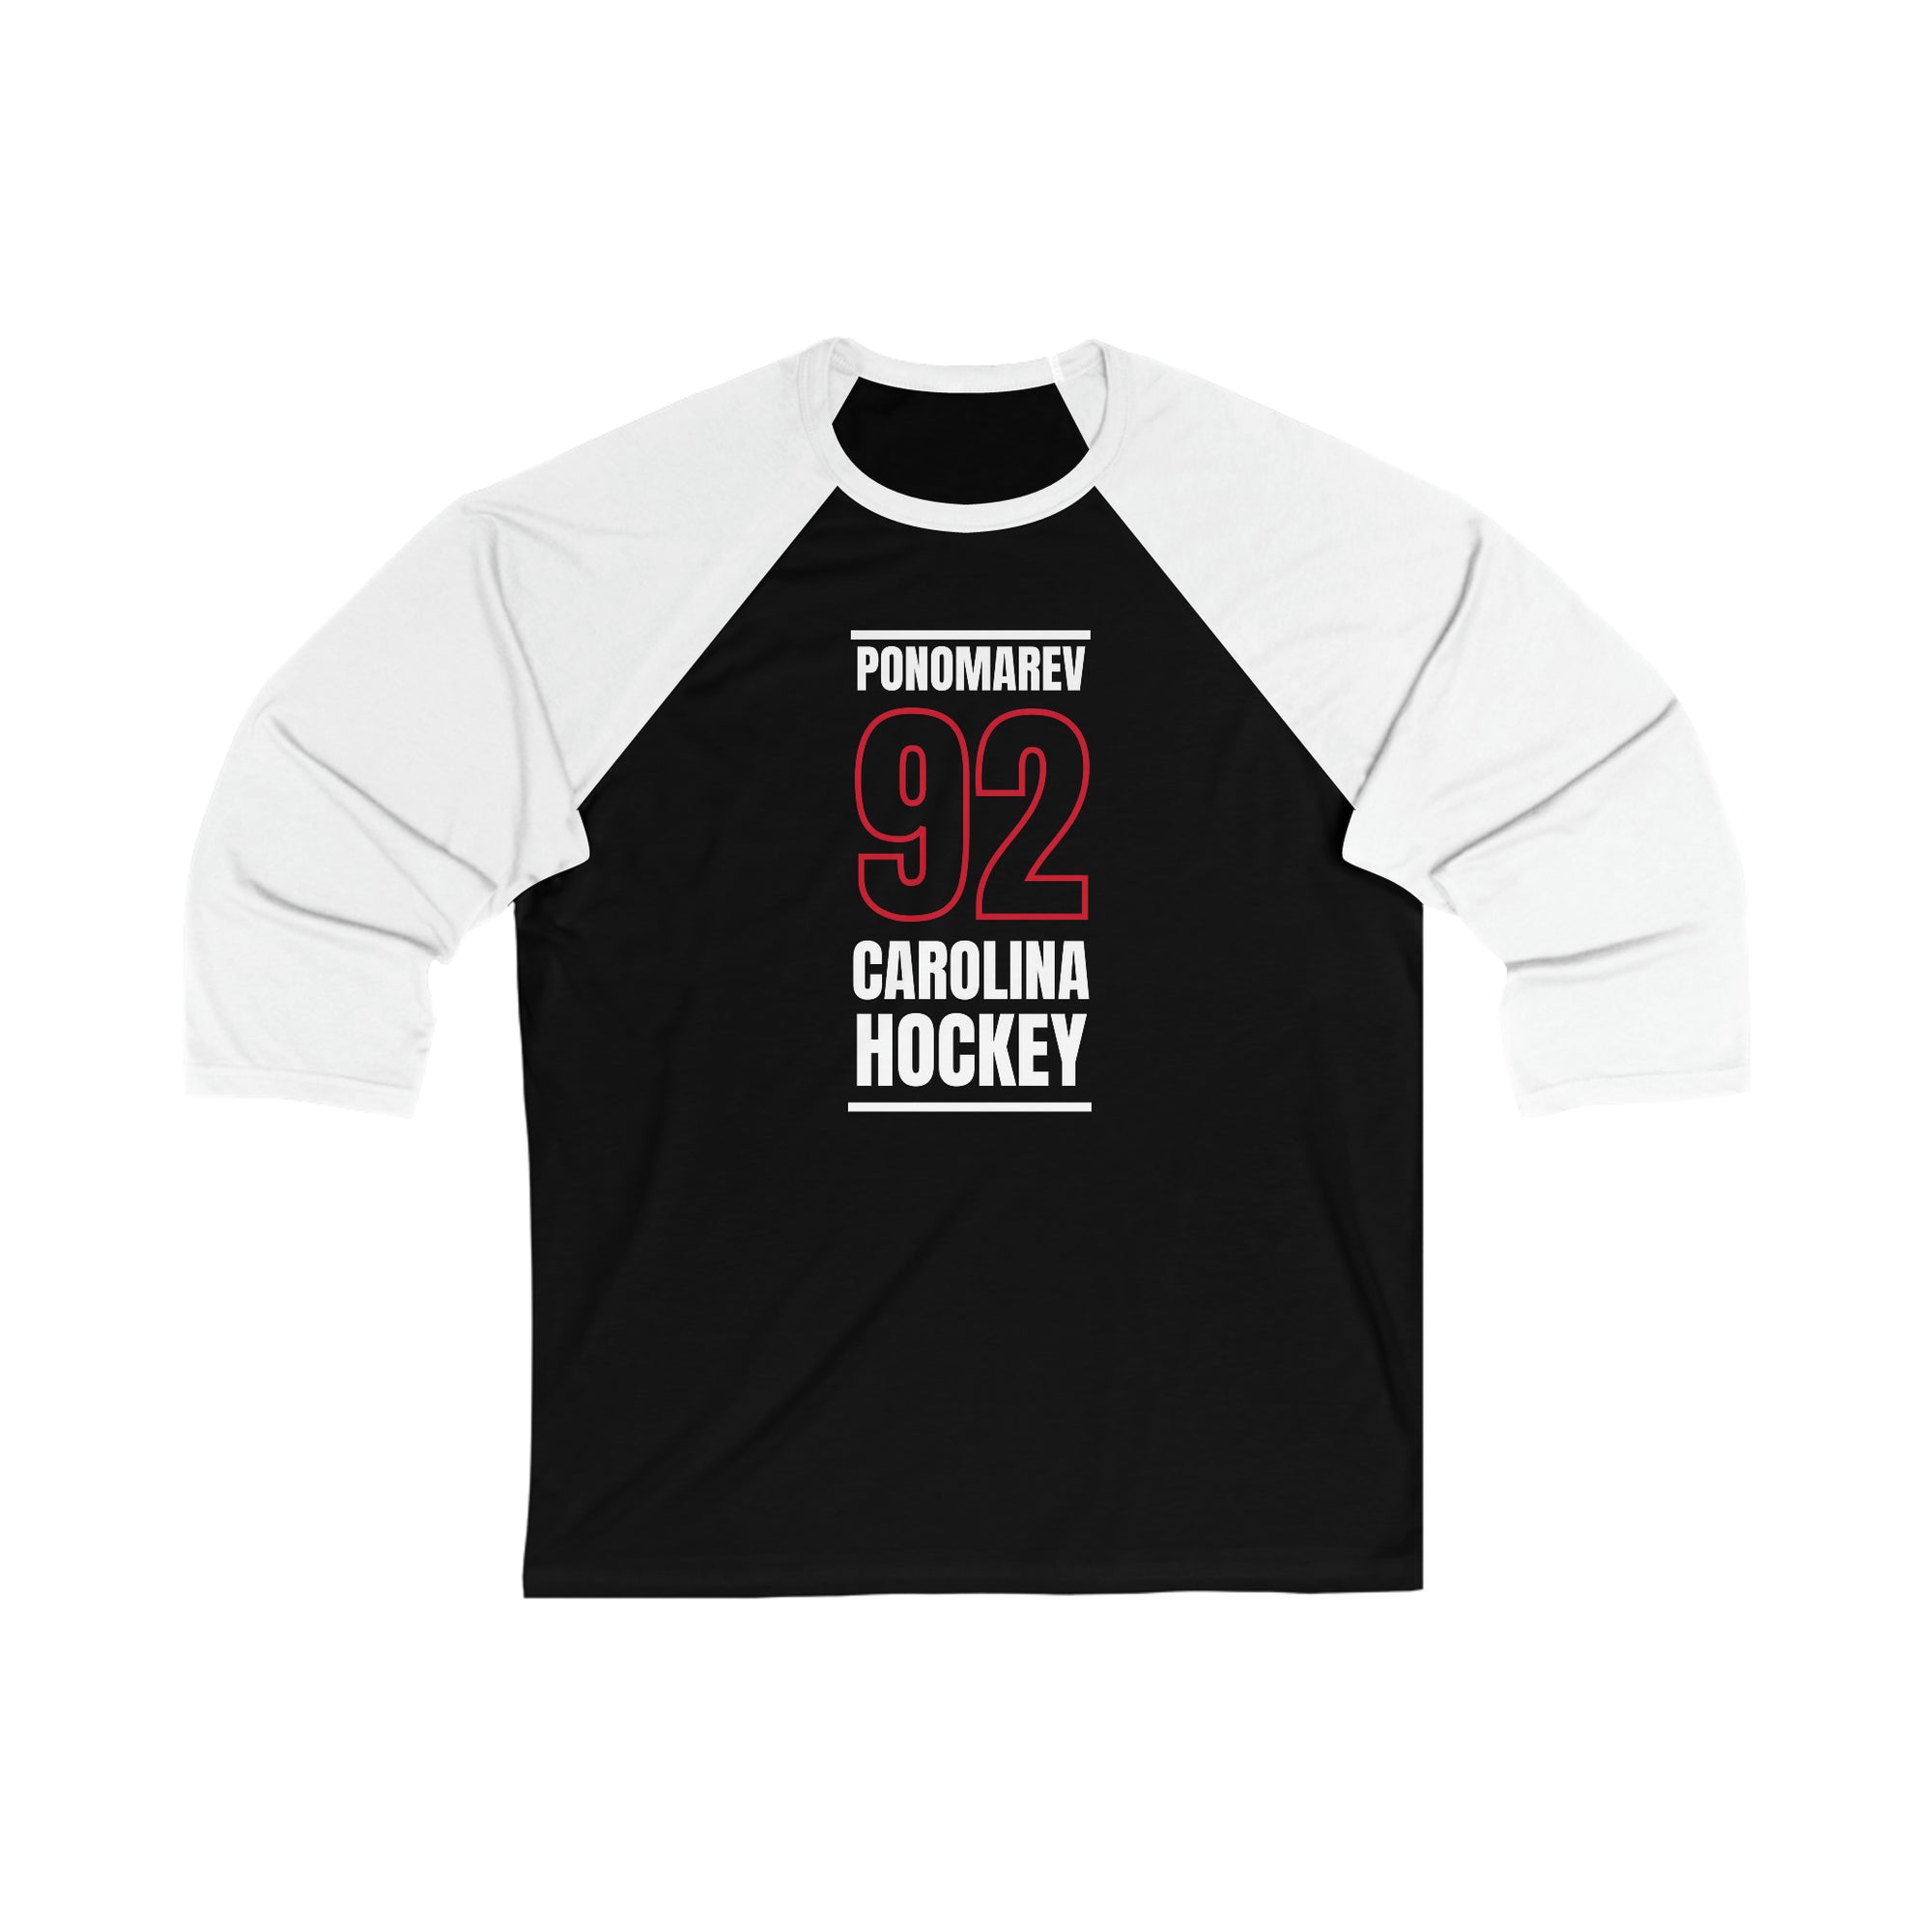 Ponomarev 92 Carolina Hockey Black Vertical Design Unisex Tri-Blend 3/4 Sleeve Raglan Baseball Shirt